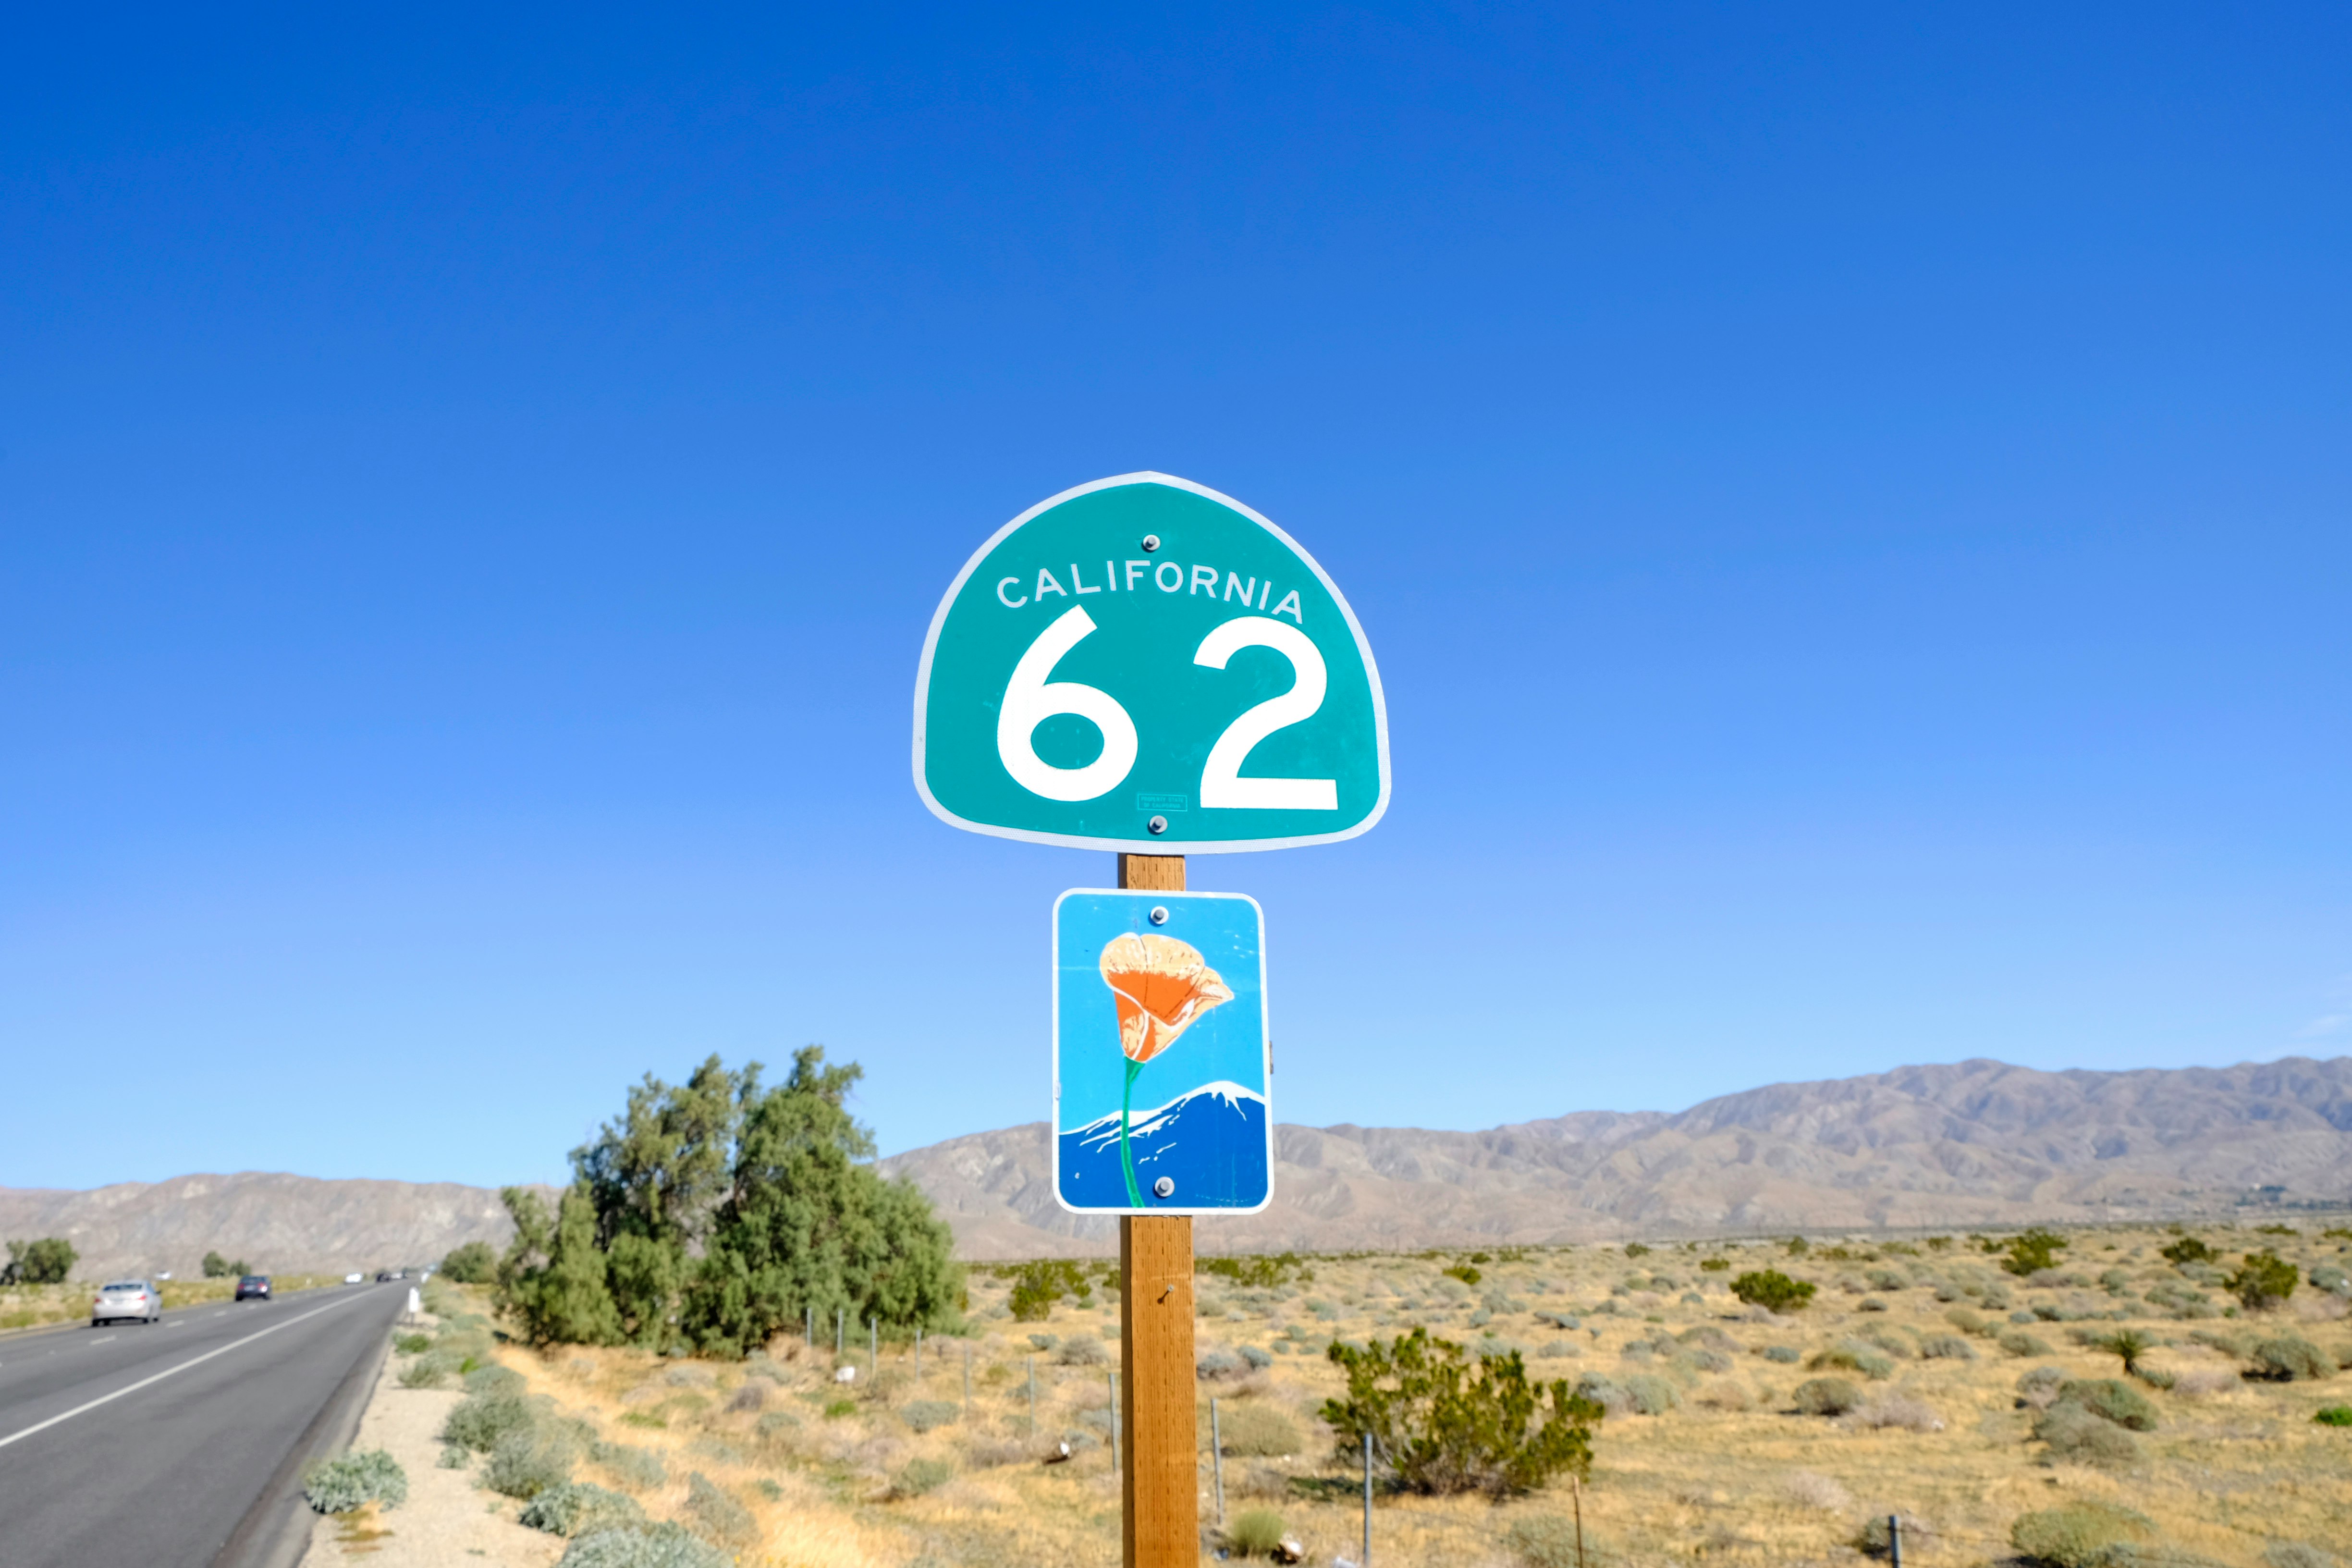 California 62 signage beside roadway